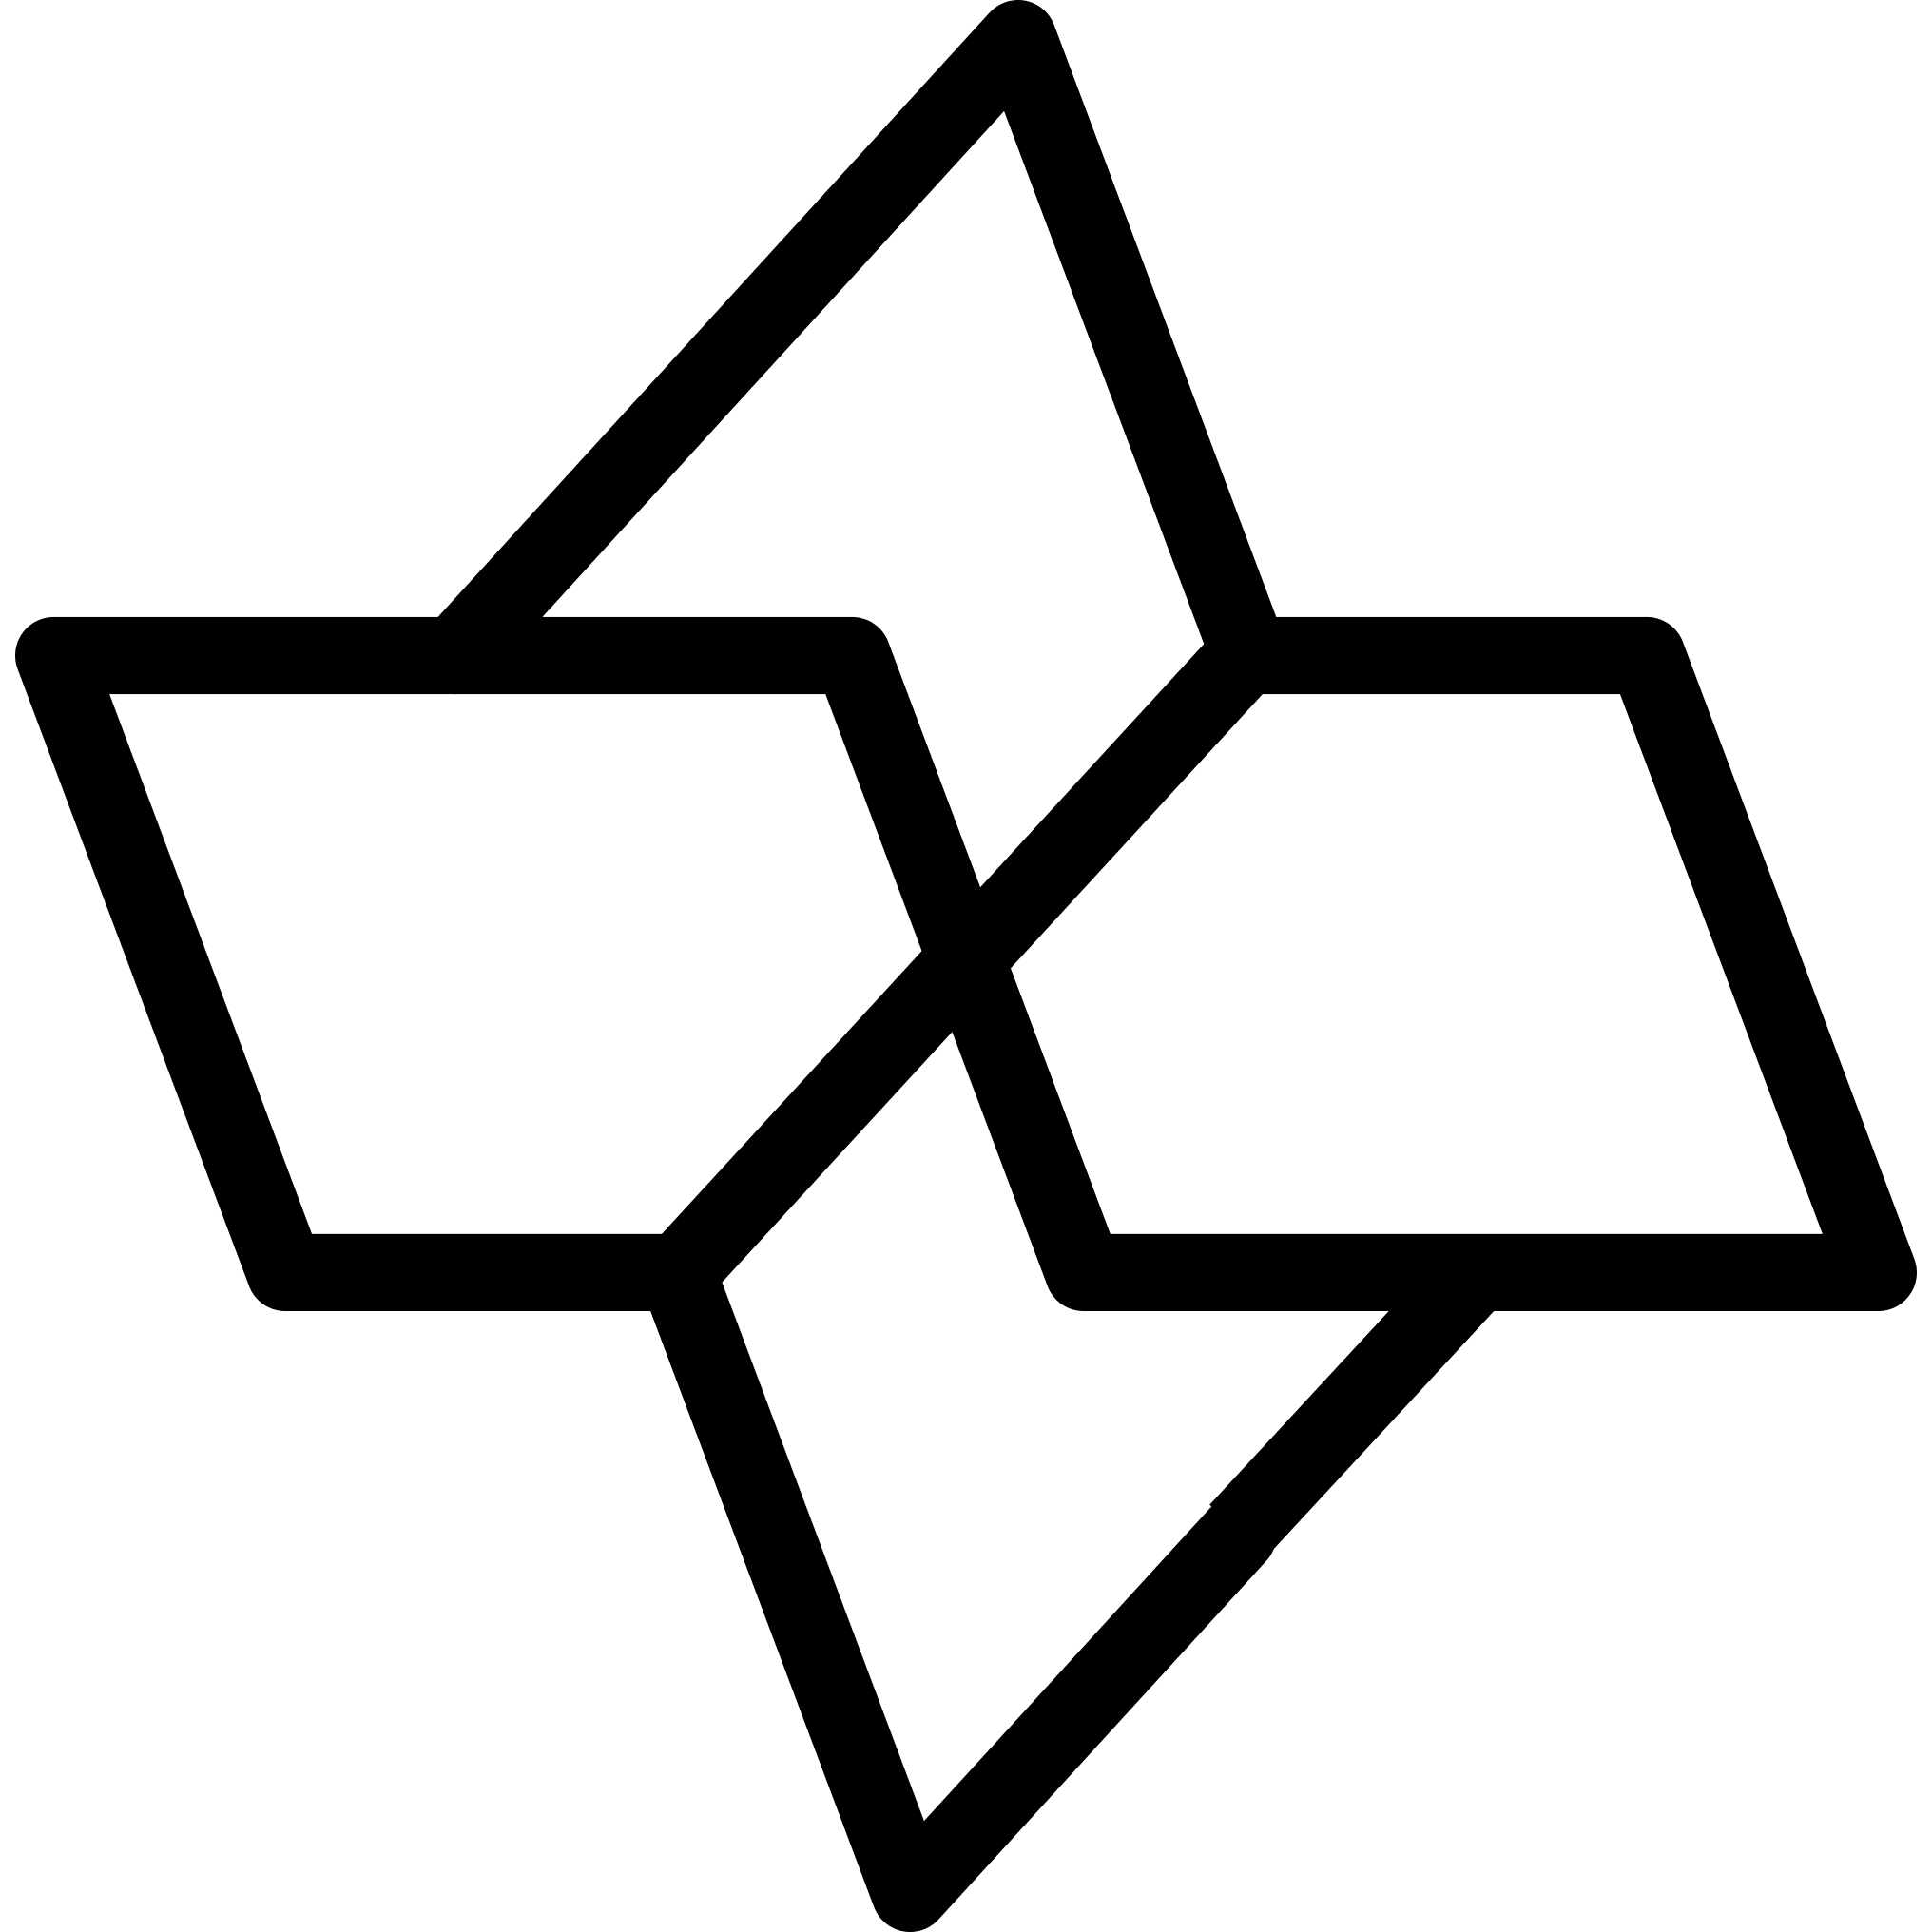 Cartesi logo in png format